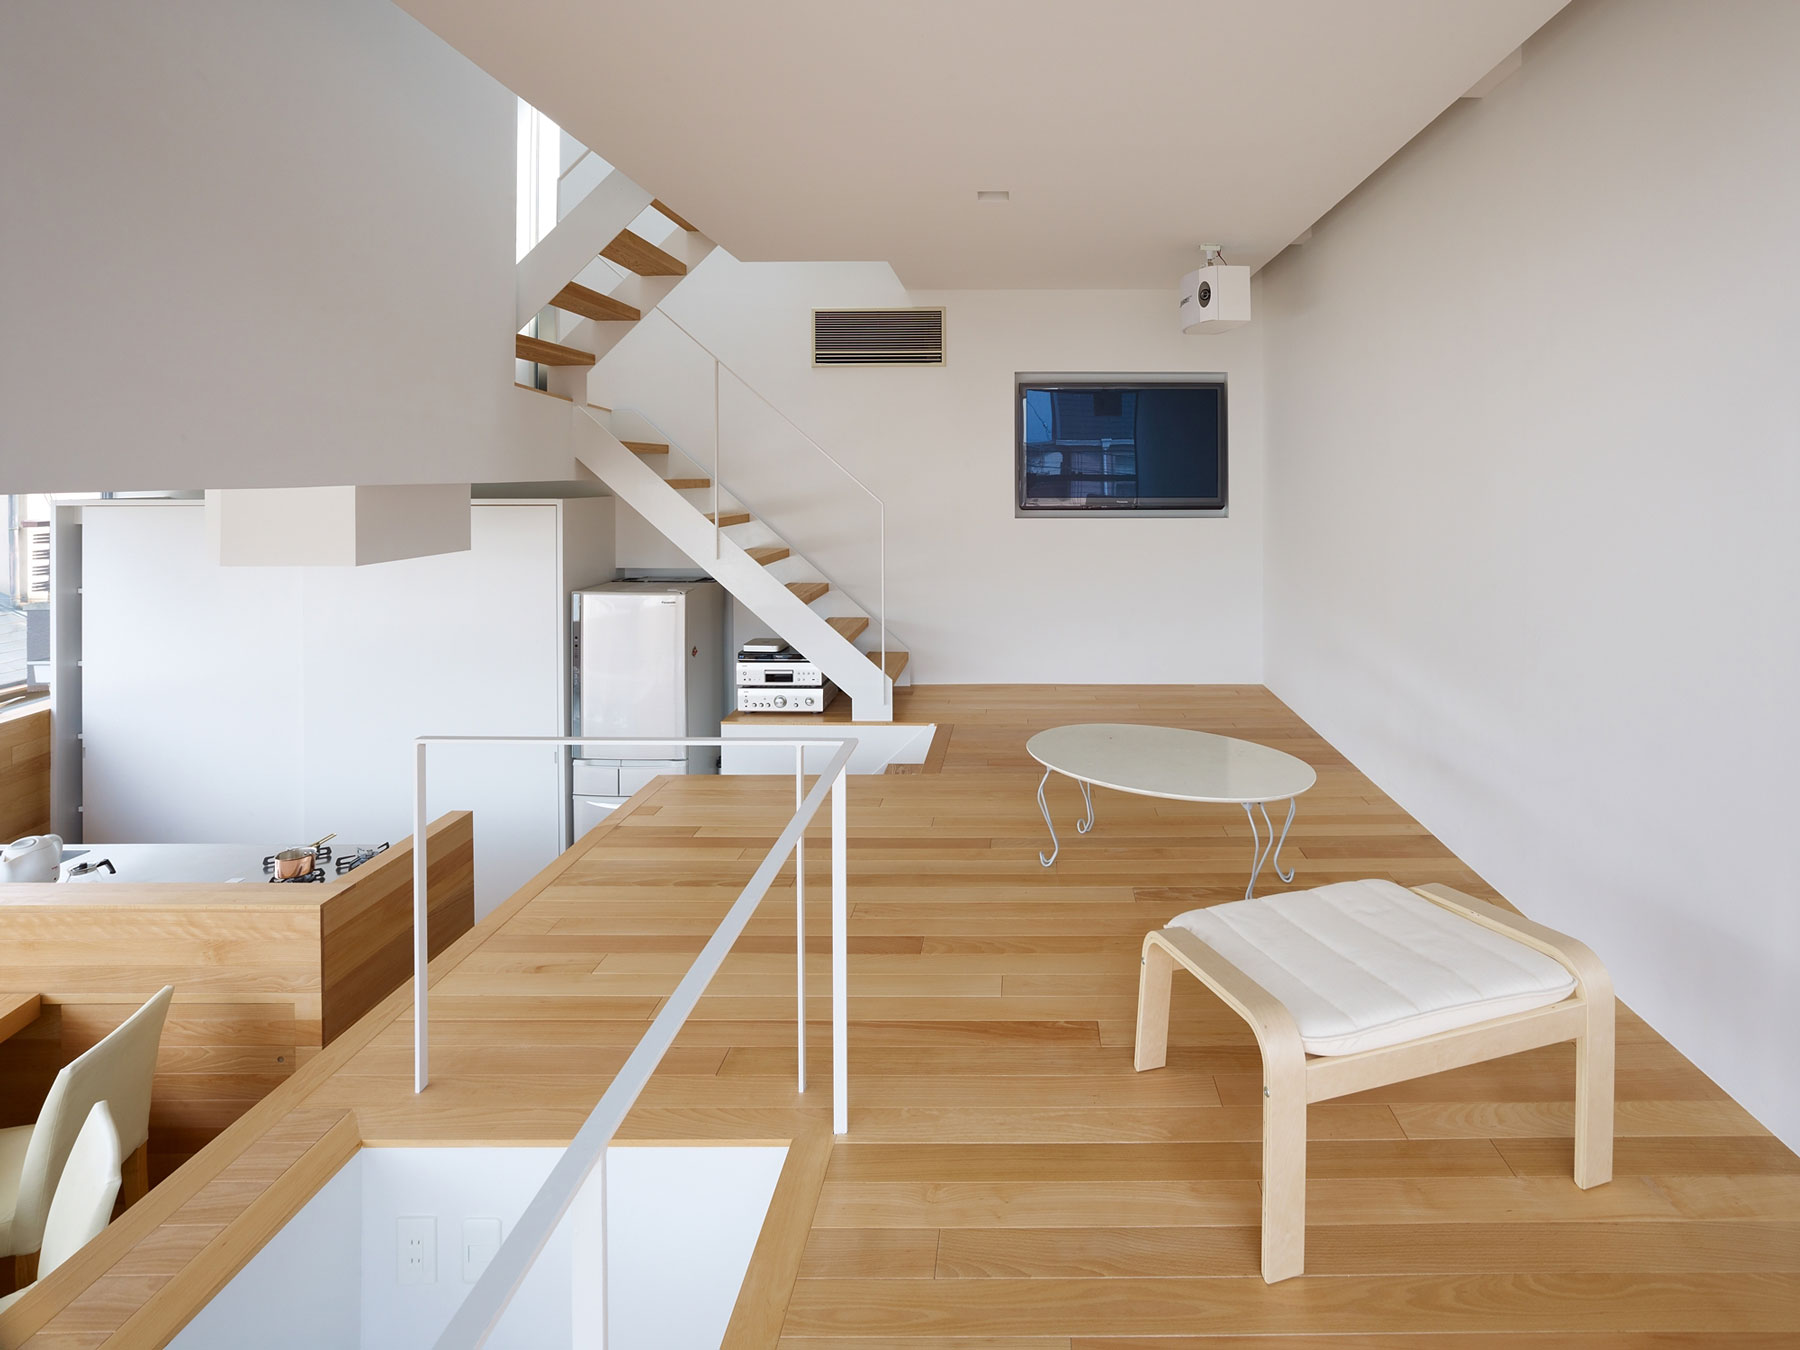 日本碉堡状住宅——Fujiwarramuro Architects